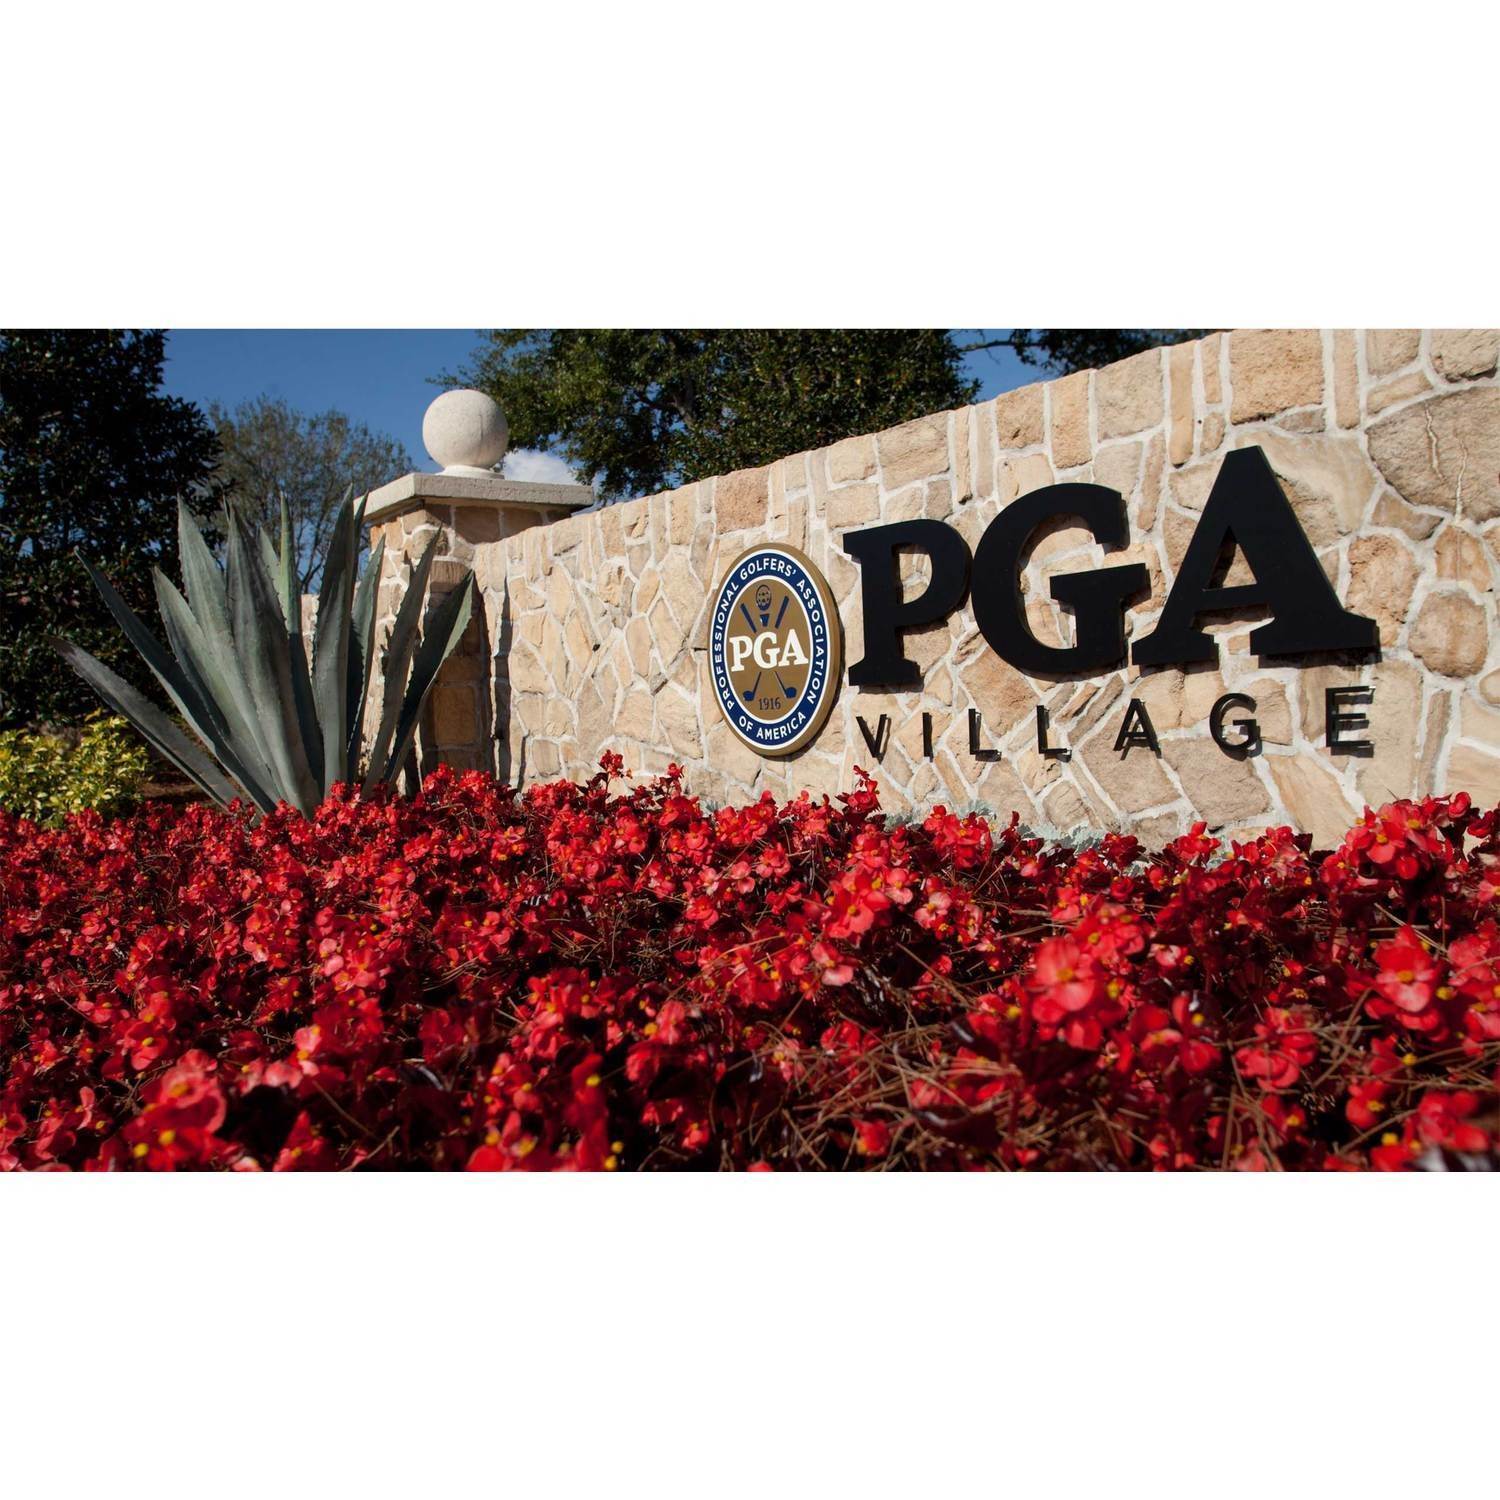 15. PGA Village Verano xây dựng tại 9250 SW Visconti Way, Port St. Lucie, FL 34986